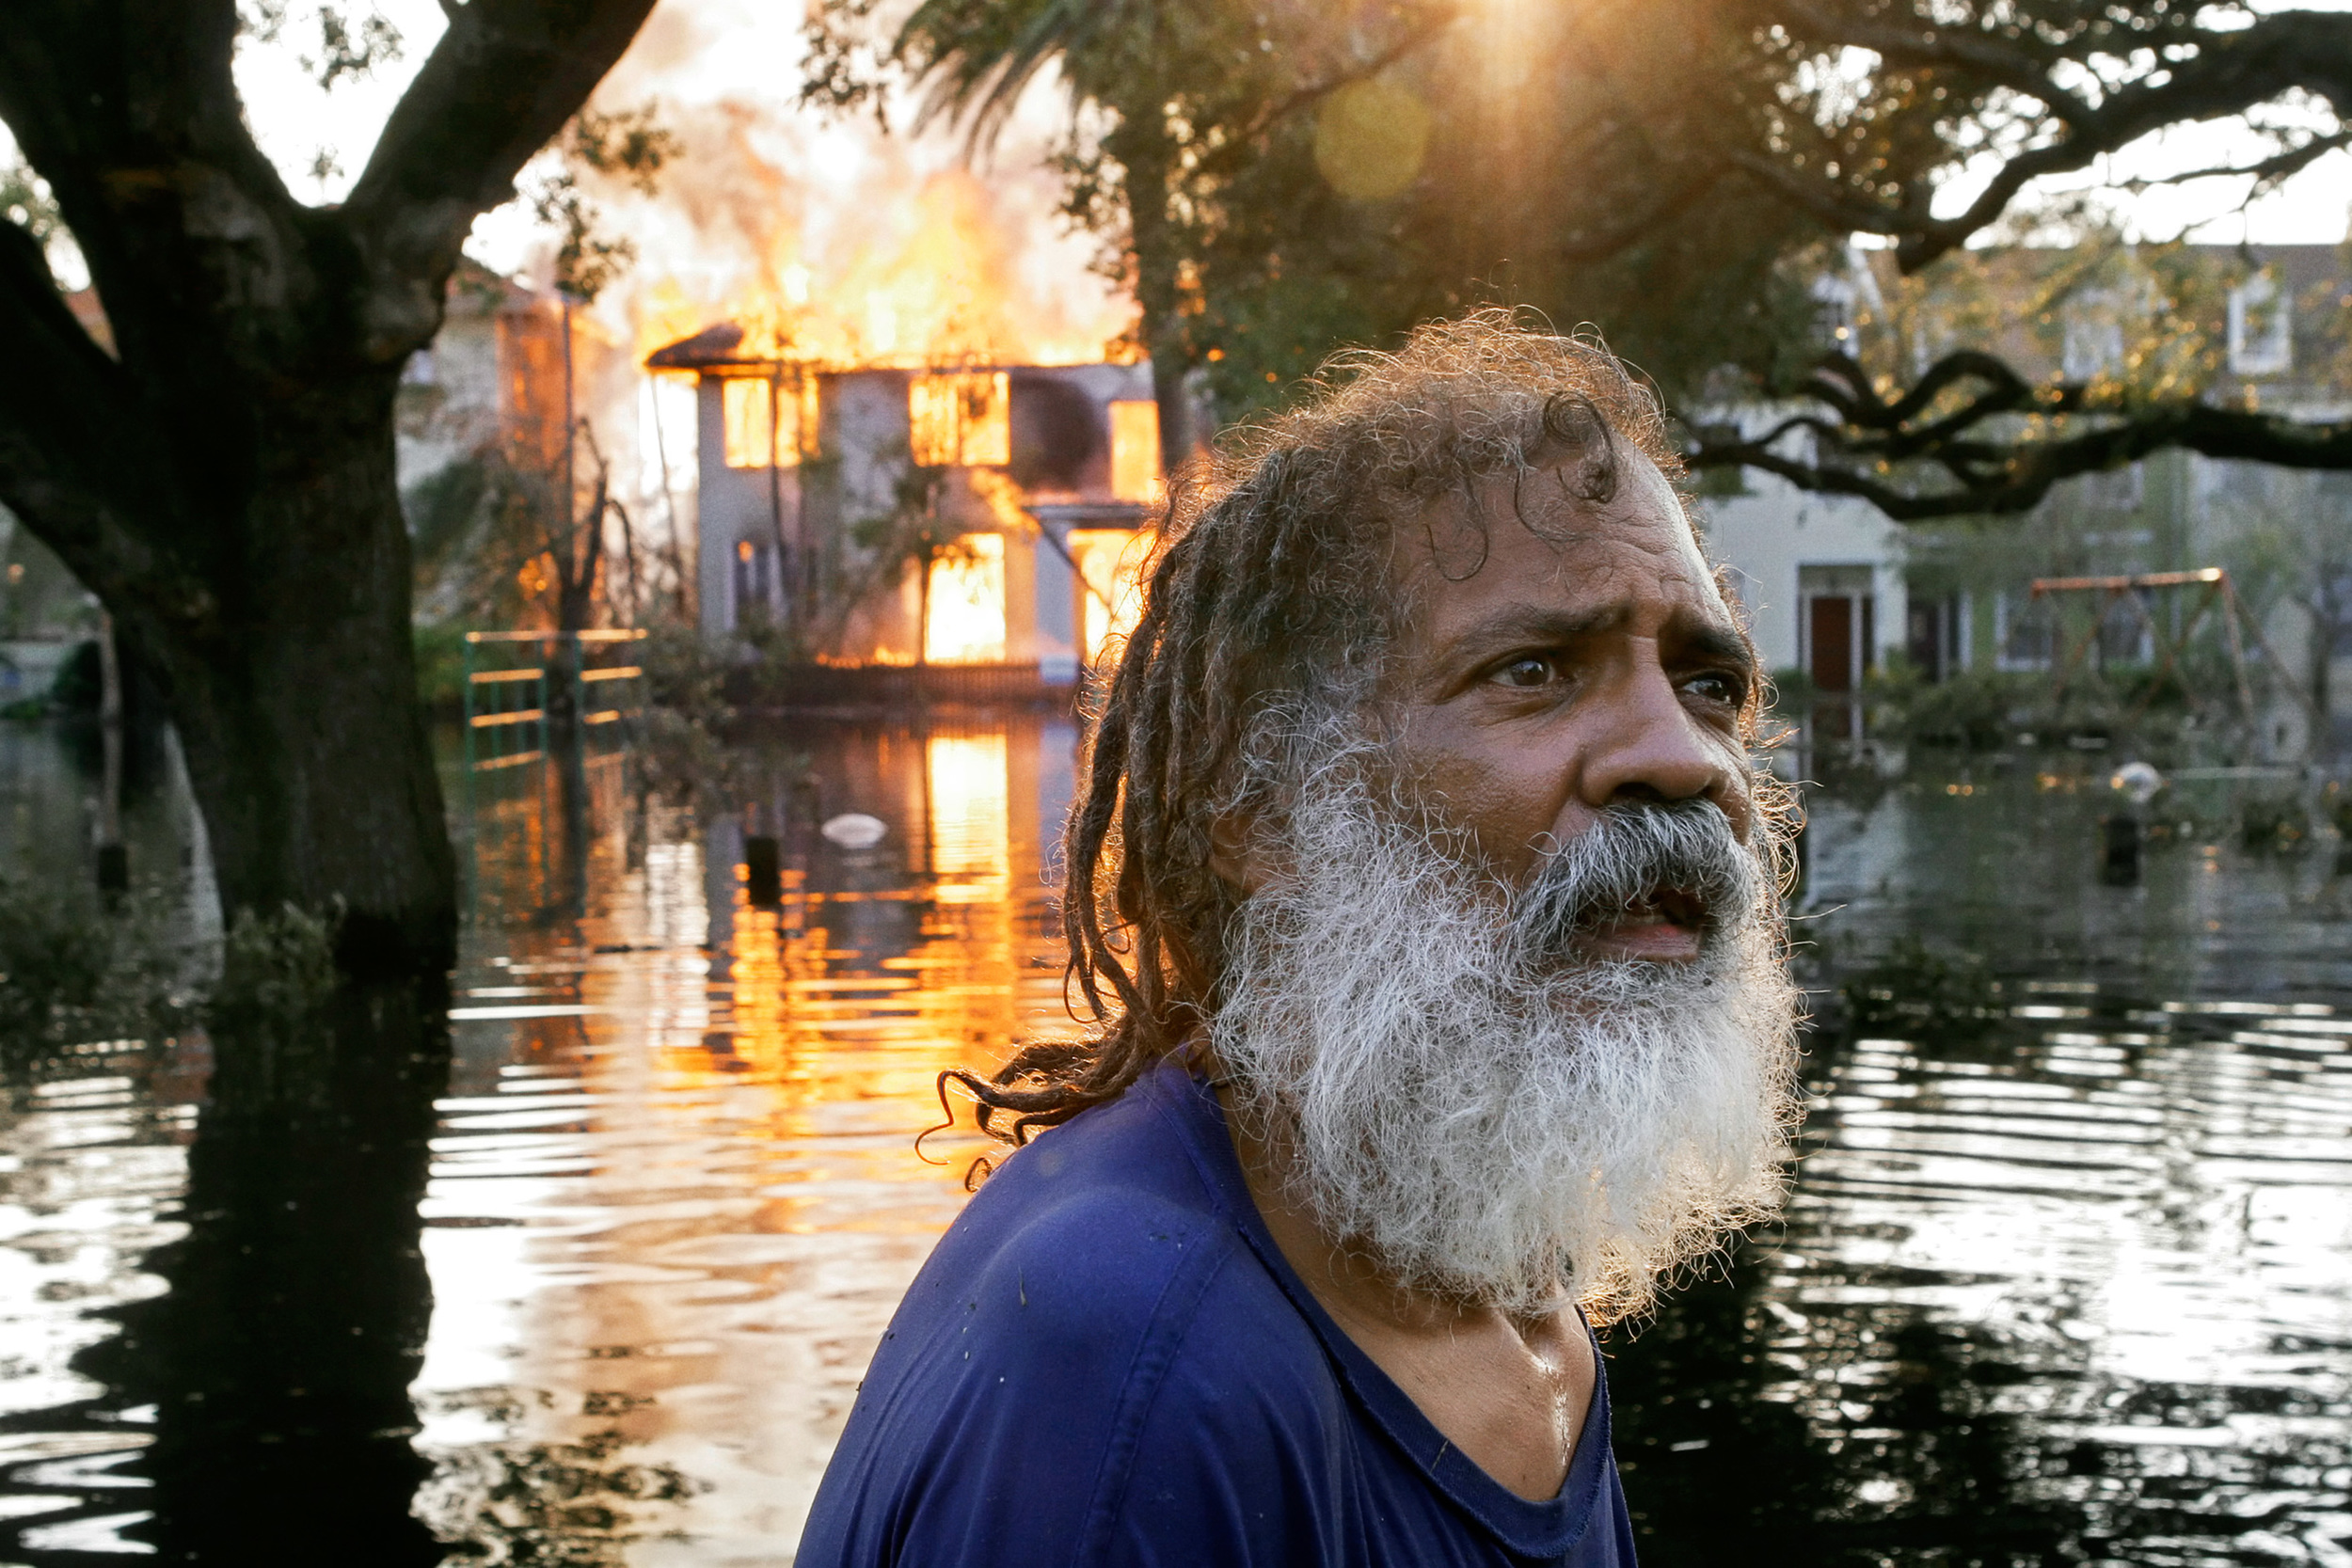 New Orleans: Hurricane Katrina